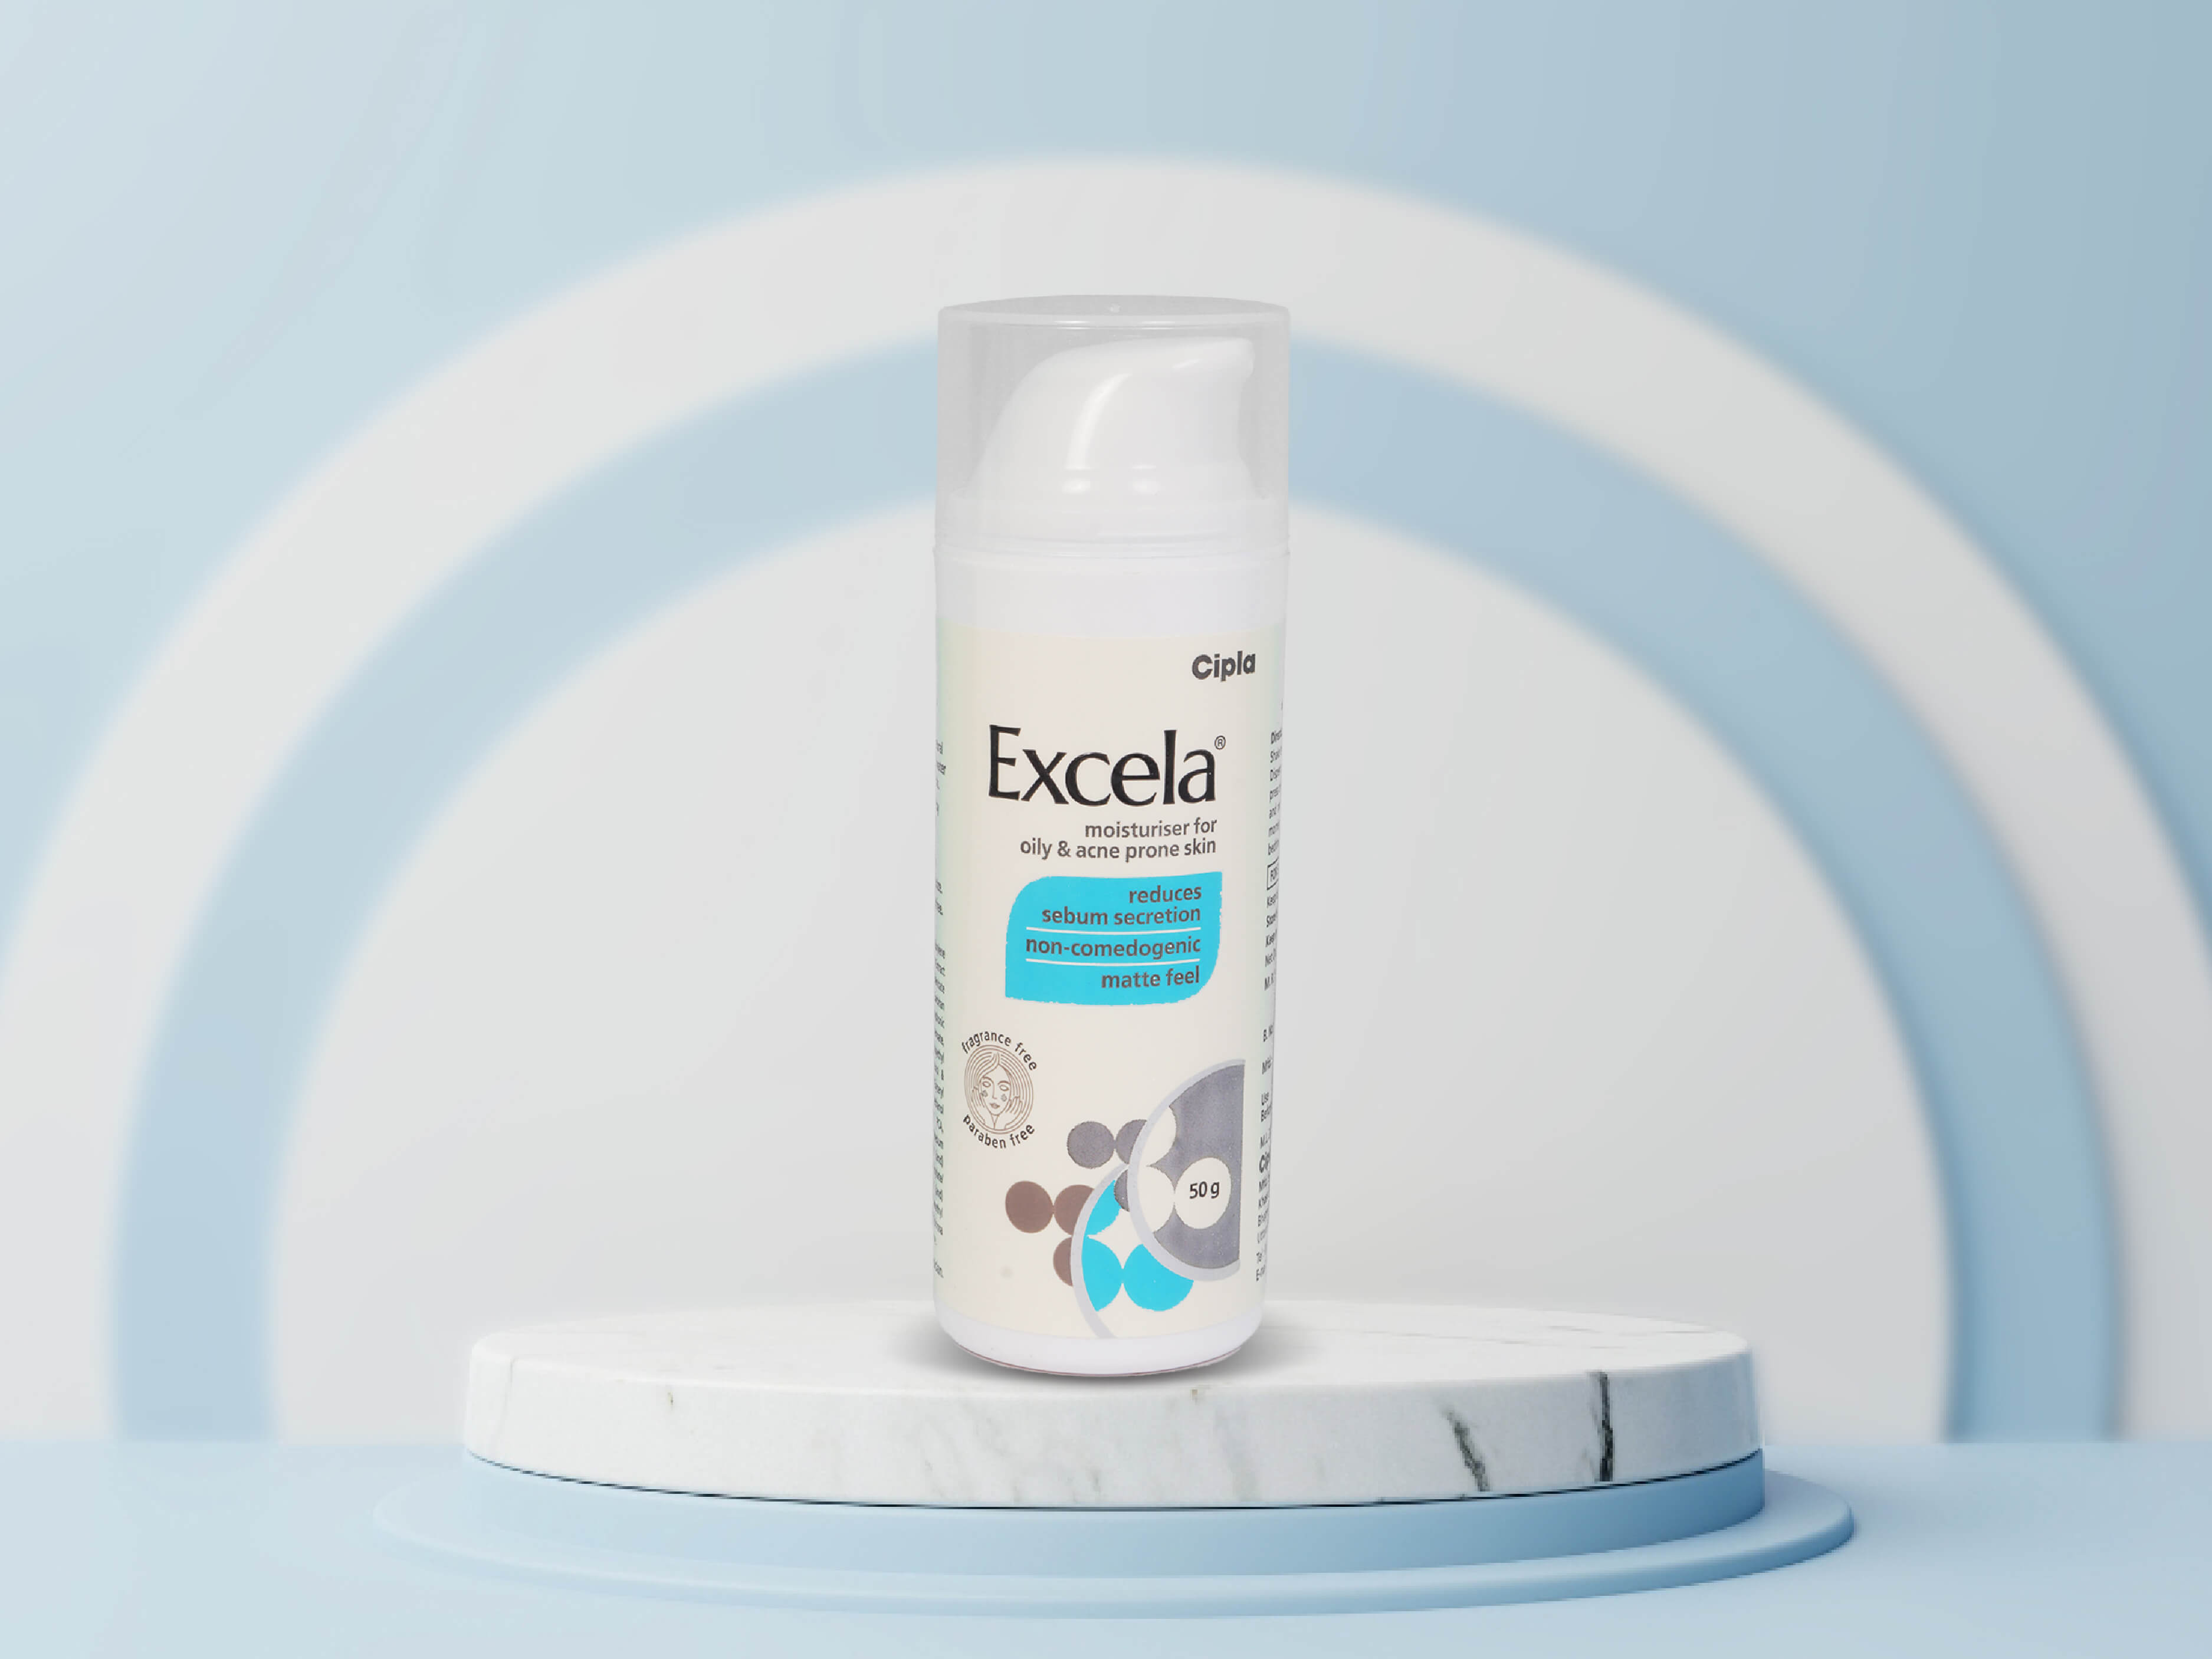 Excela Moisturiser for Oily & Acne Prone Skin - Clinikally